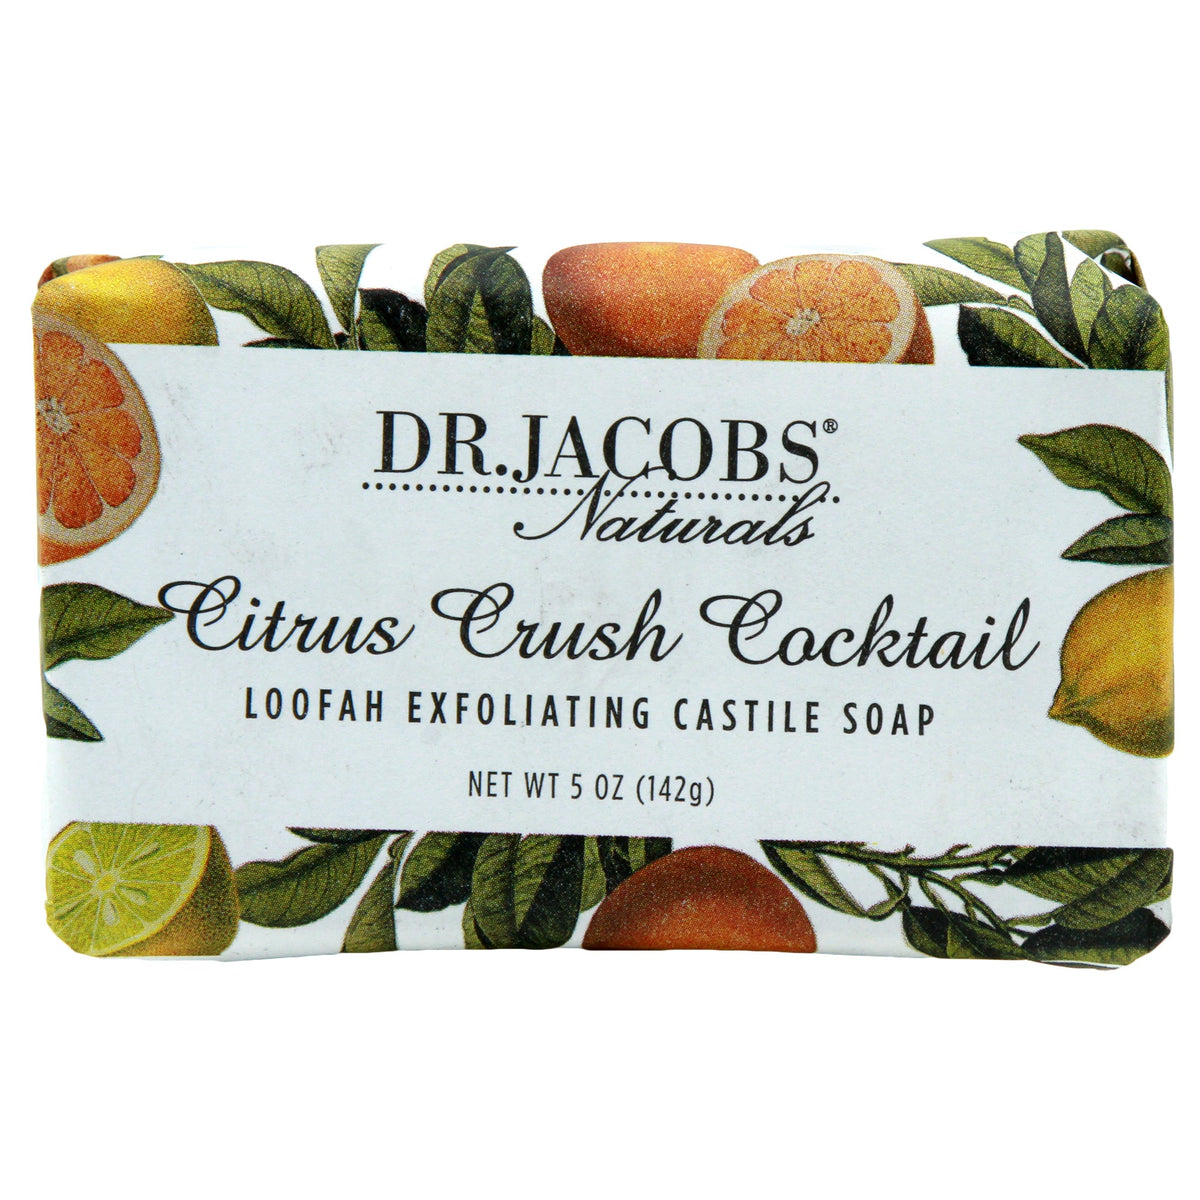 Citrus Crush Cocktail by Dr. Jacobs Naturals